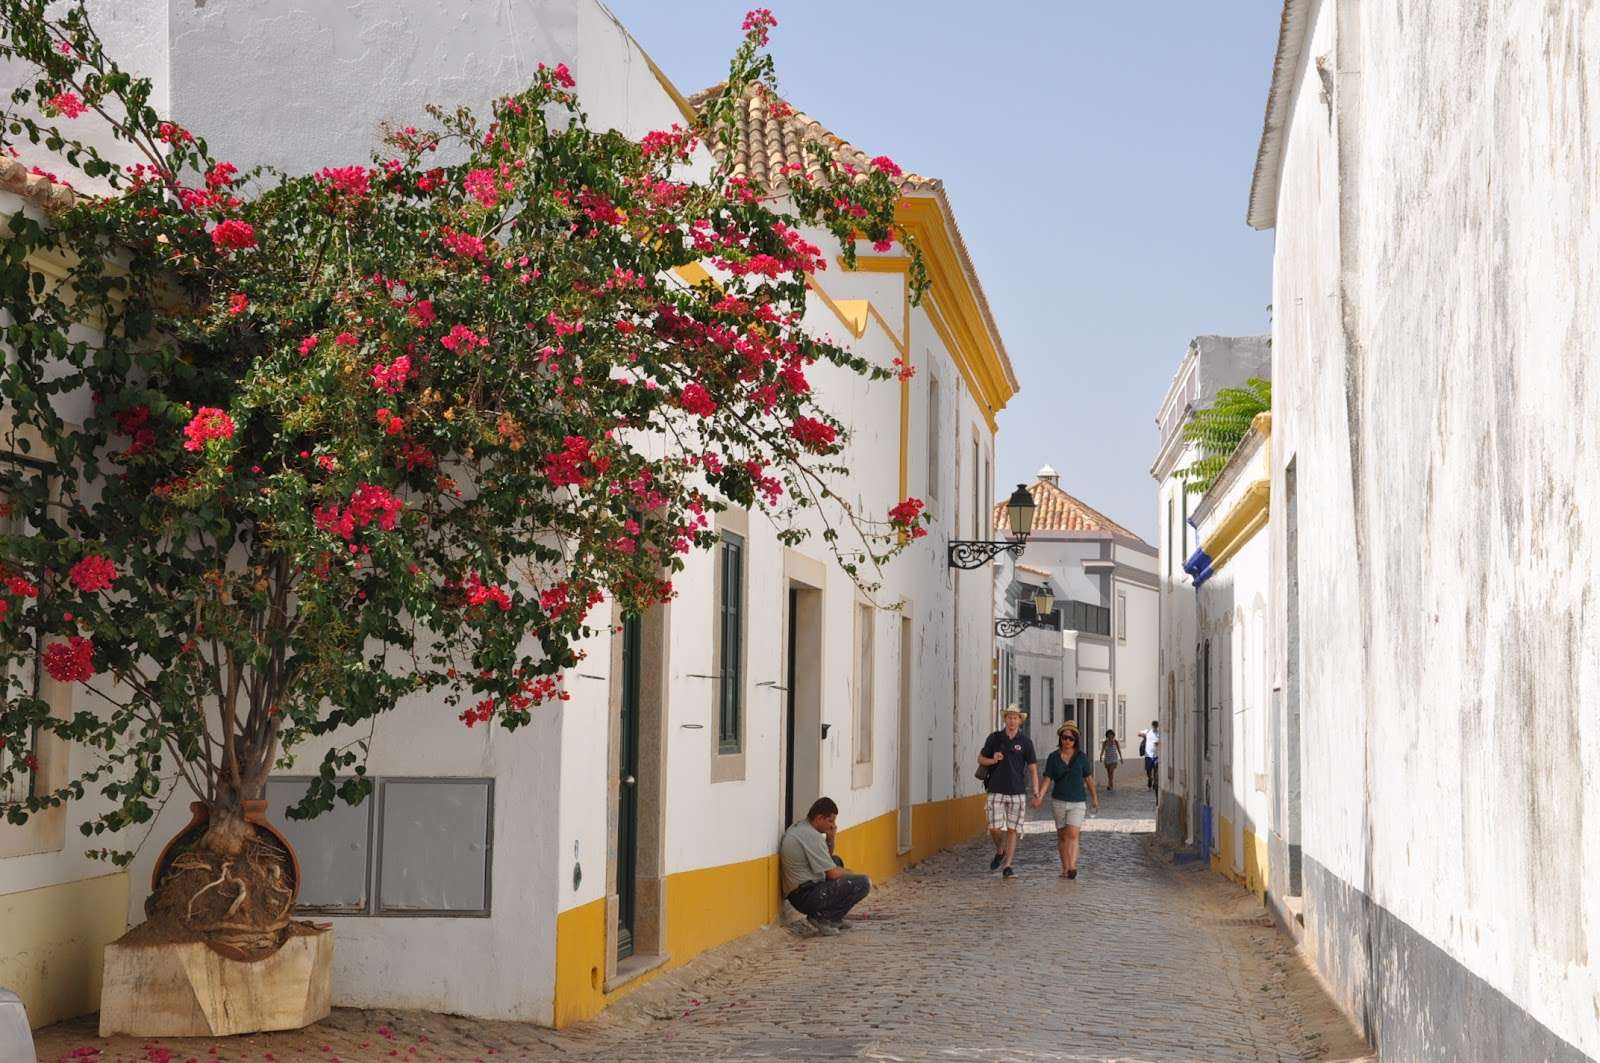 Geplaveide straat in Portugal legpuzzel online